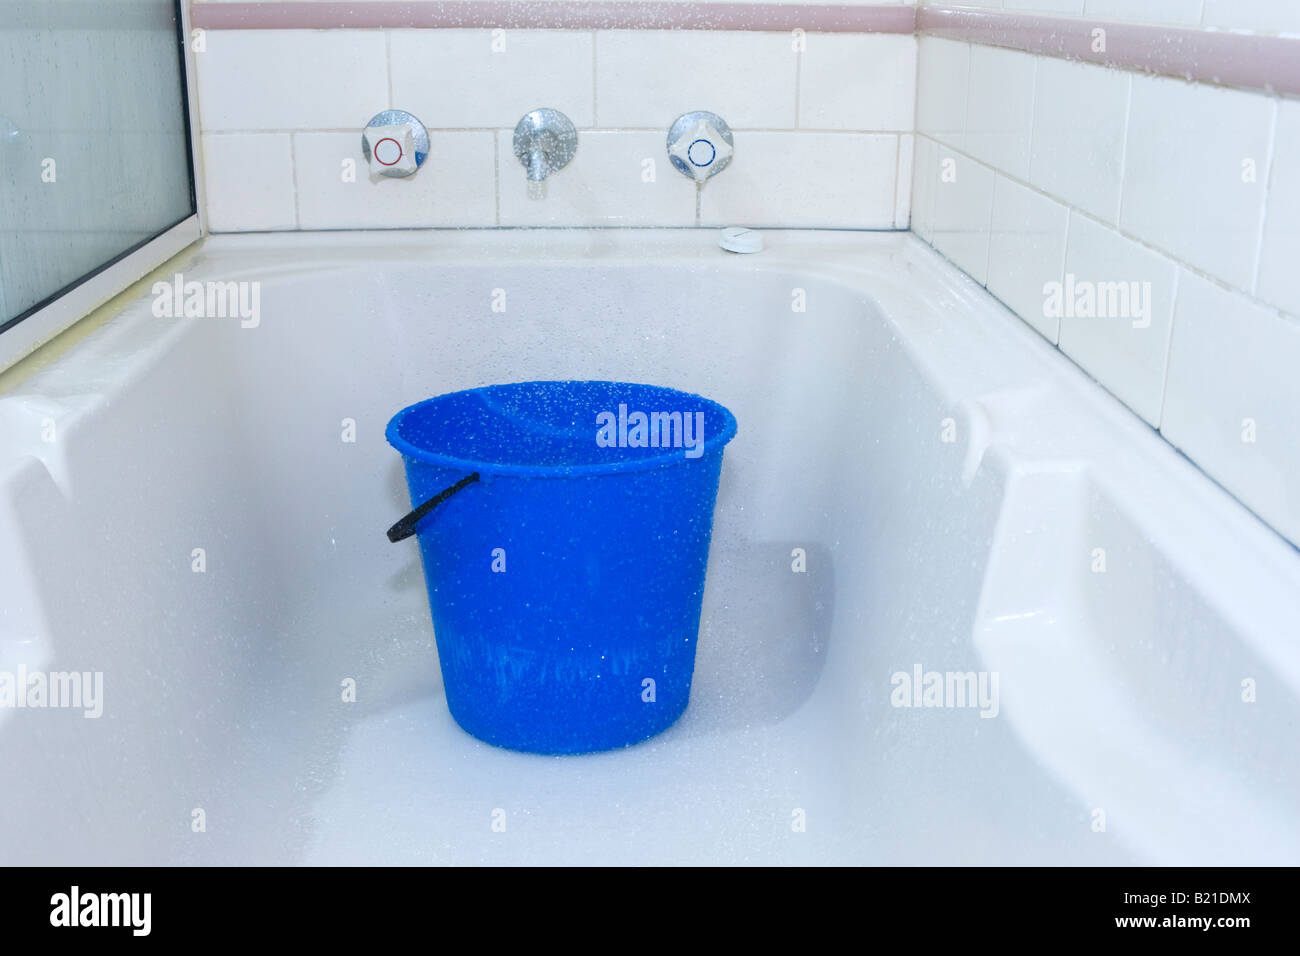 Baño de ahorro de agua fotografías e imágenes de alta resolución - Alamy